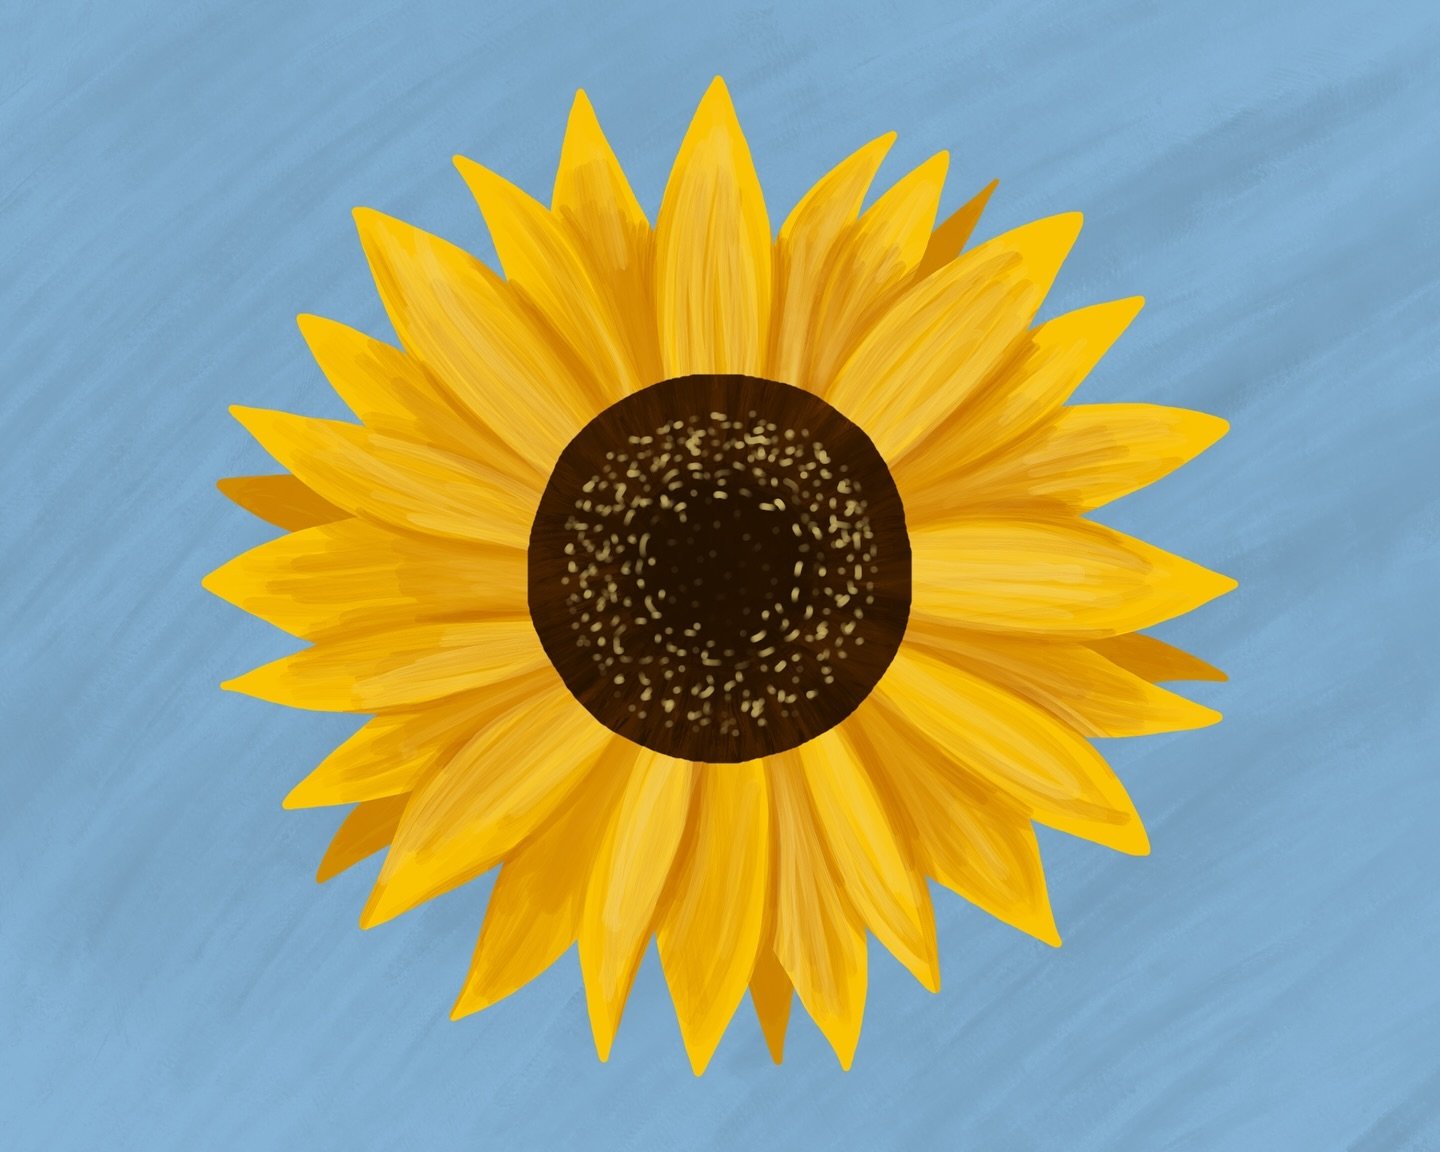 Let the sun in! 🌻

#procreate #digitalillustration #illustration #creative #creativity #creativestudio #sunflower #flower #plant #nature